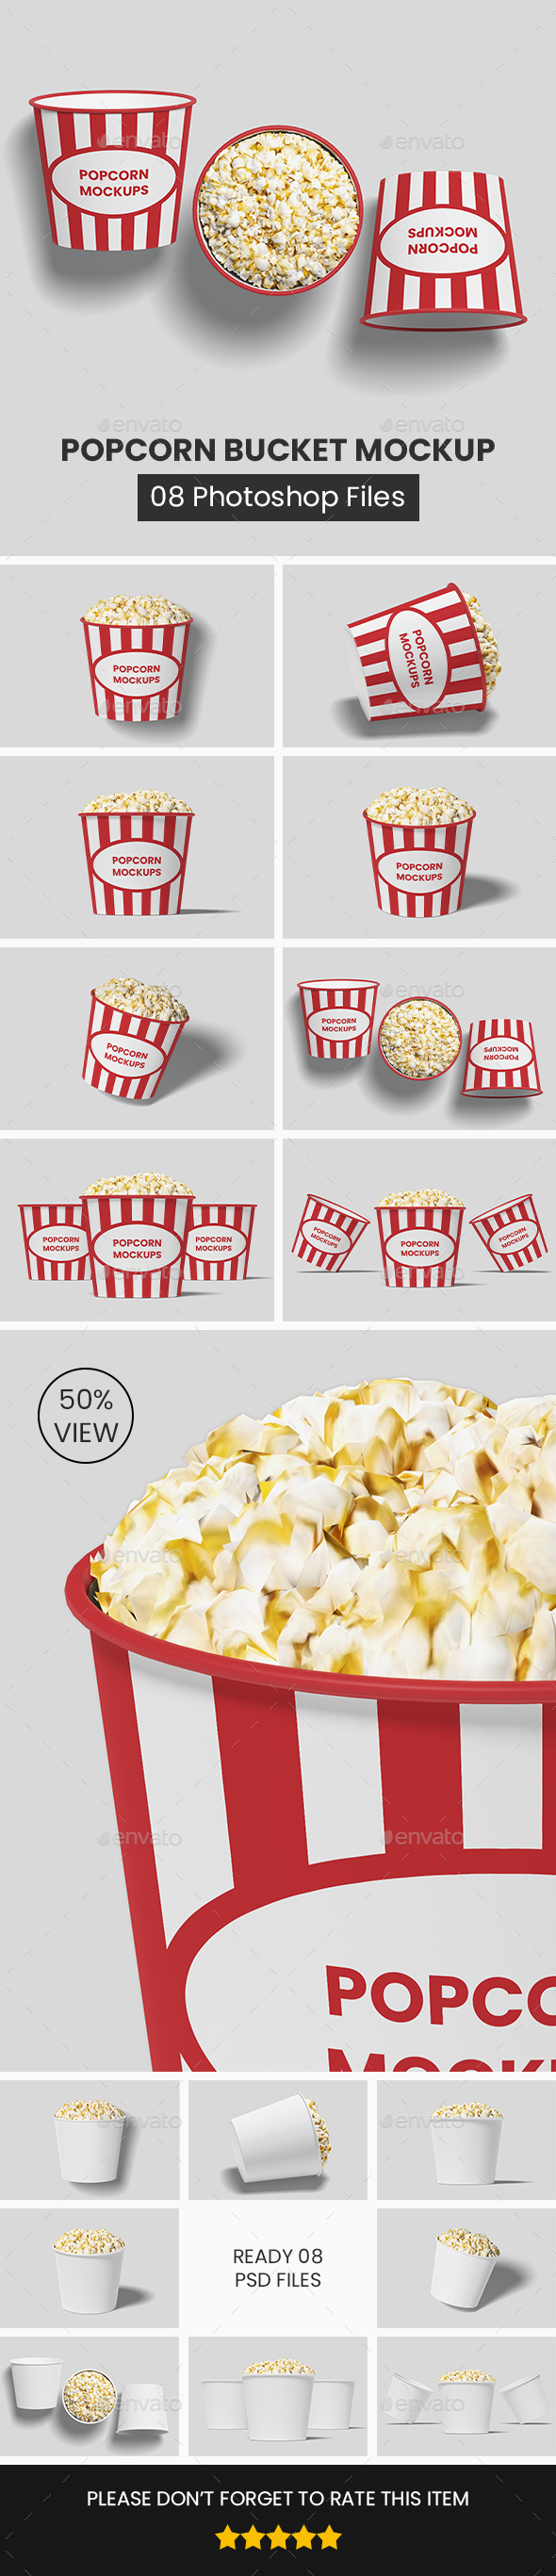 [DOWNLOAD]Popcorn Bucket Mockup | Pop Corn